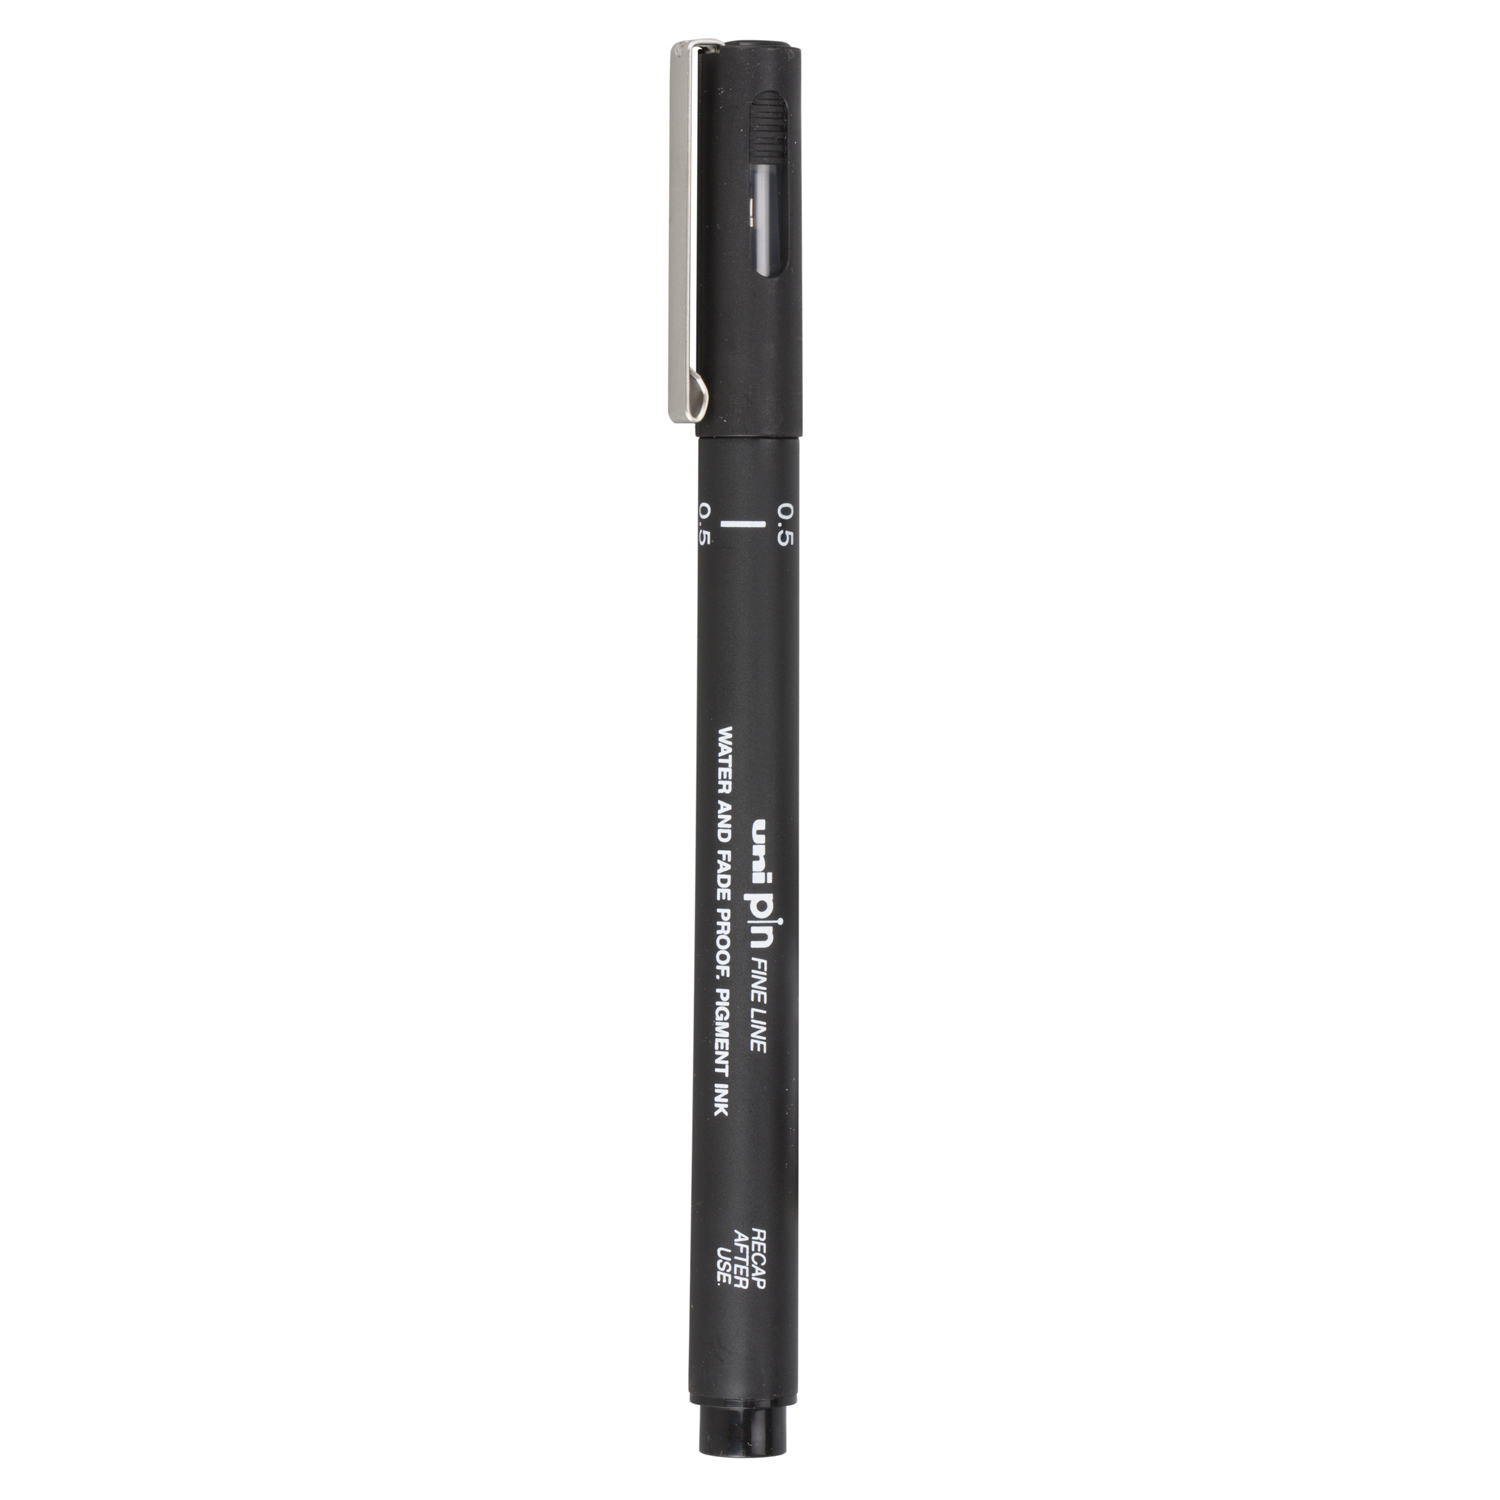 Uniball Pin Fine Liner Drawing Pen - Black / 0.05mm Image 1